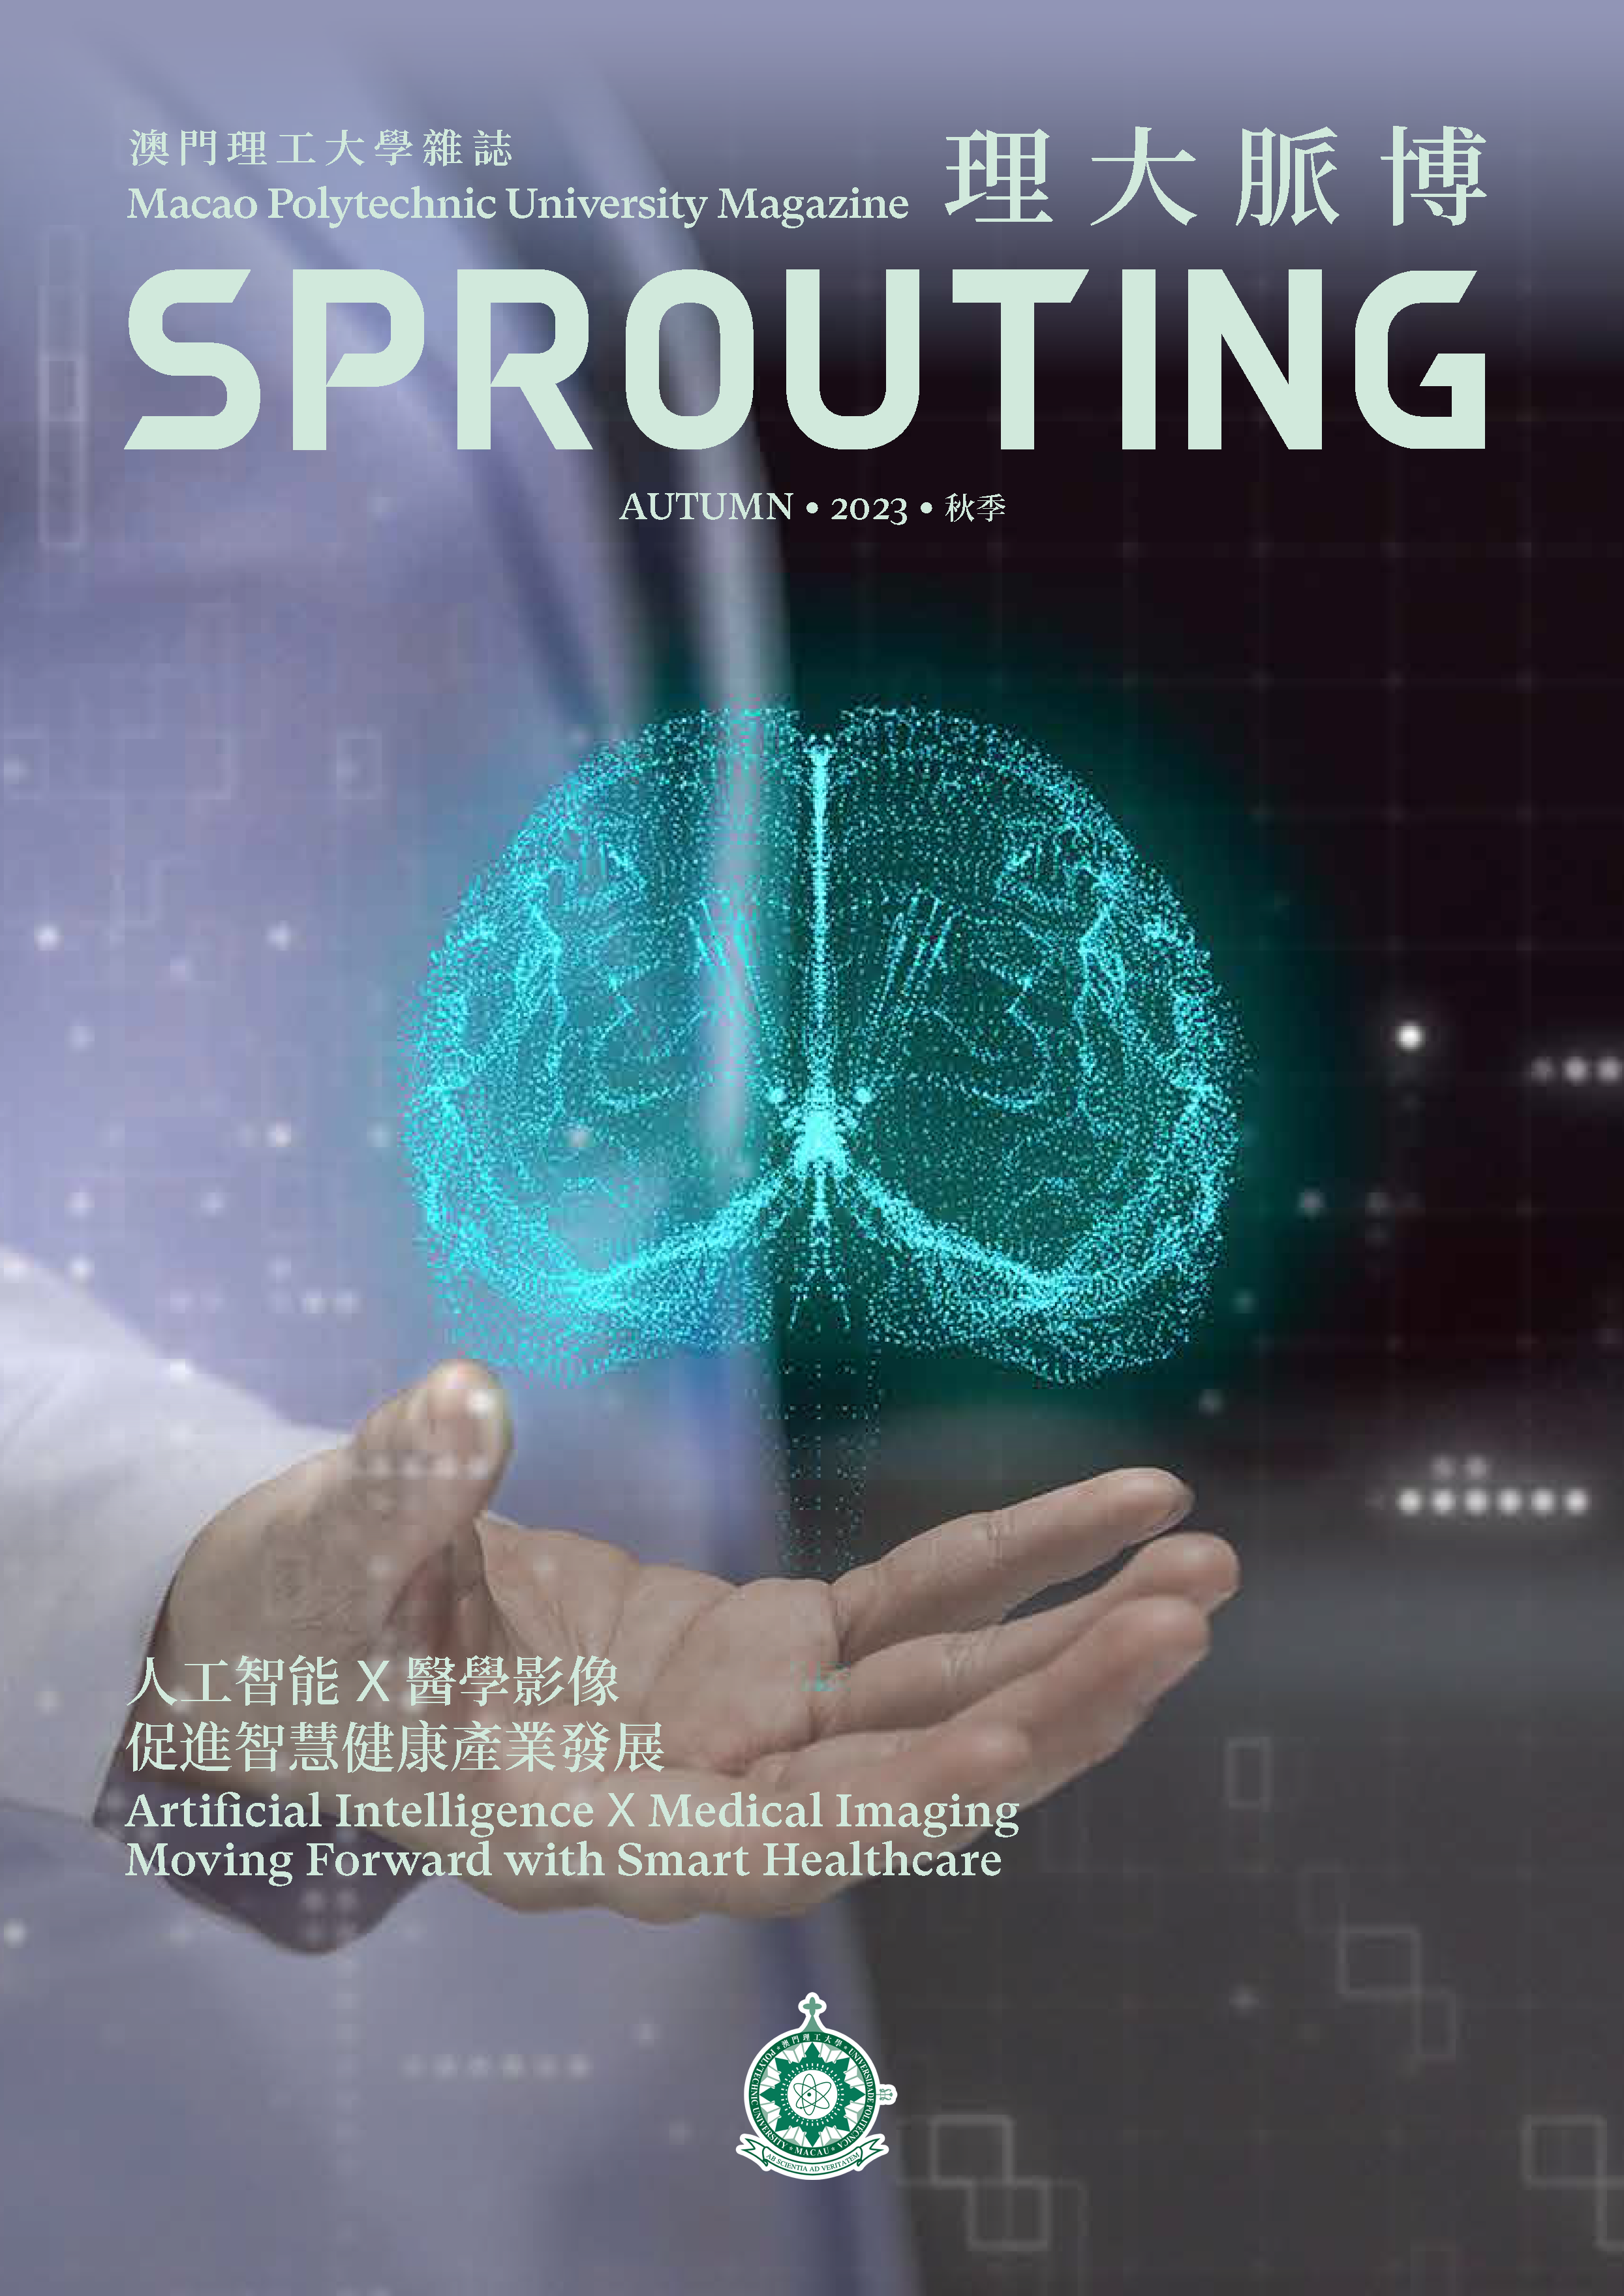 Sprouting MPU Magazine